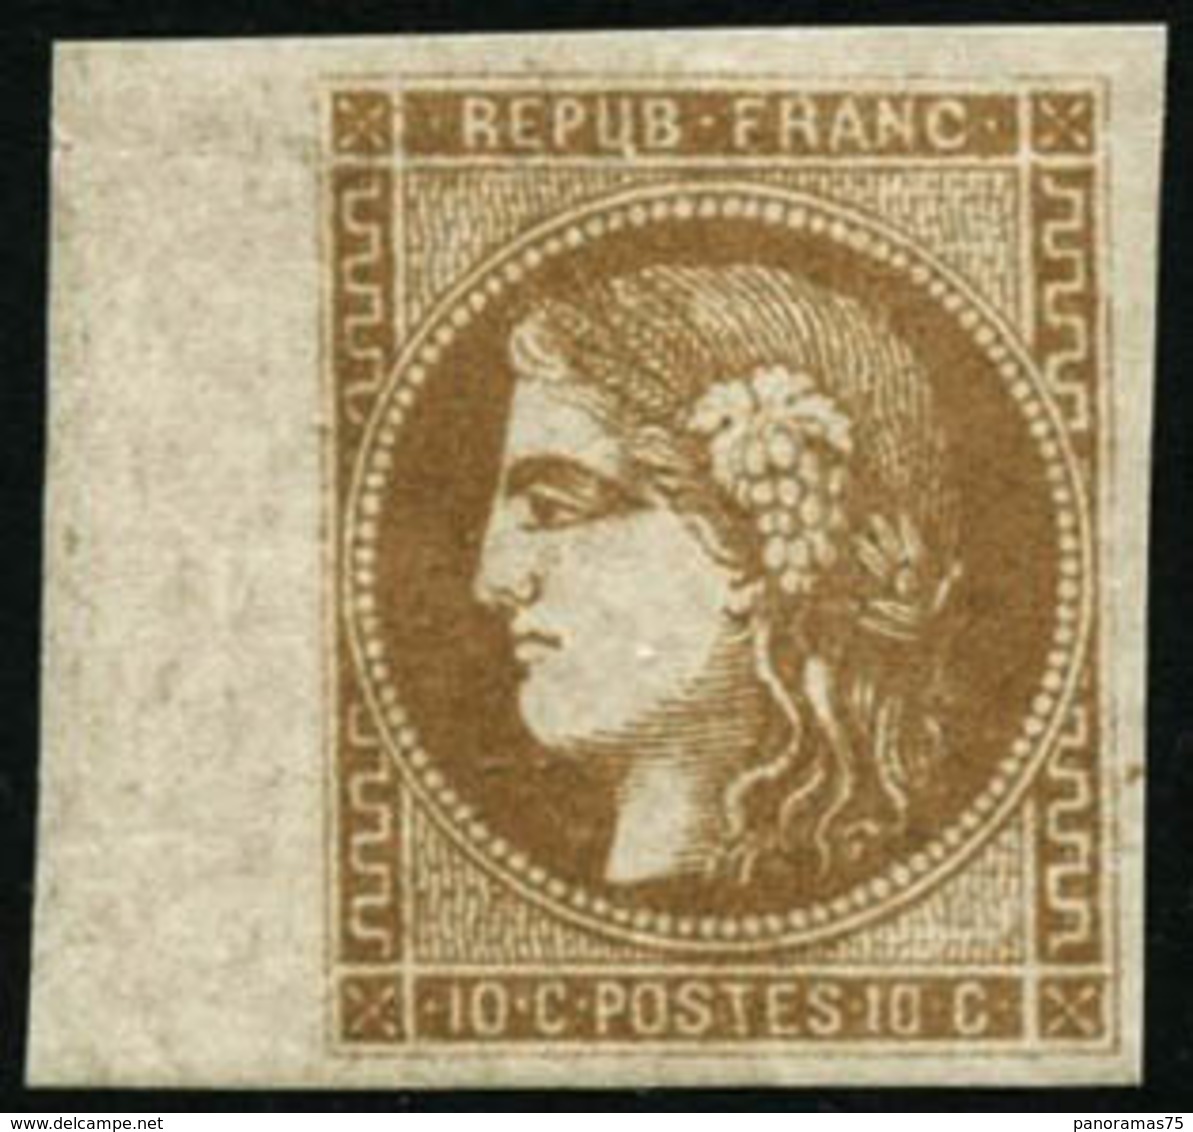 ** N°43A 10c Bistre, R1 - TB - 1870 Bordeaux Printing